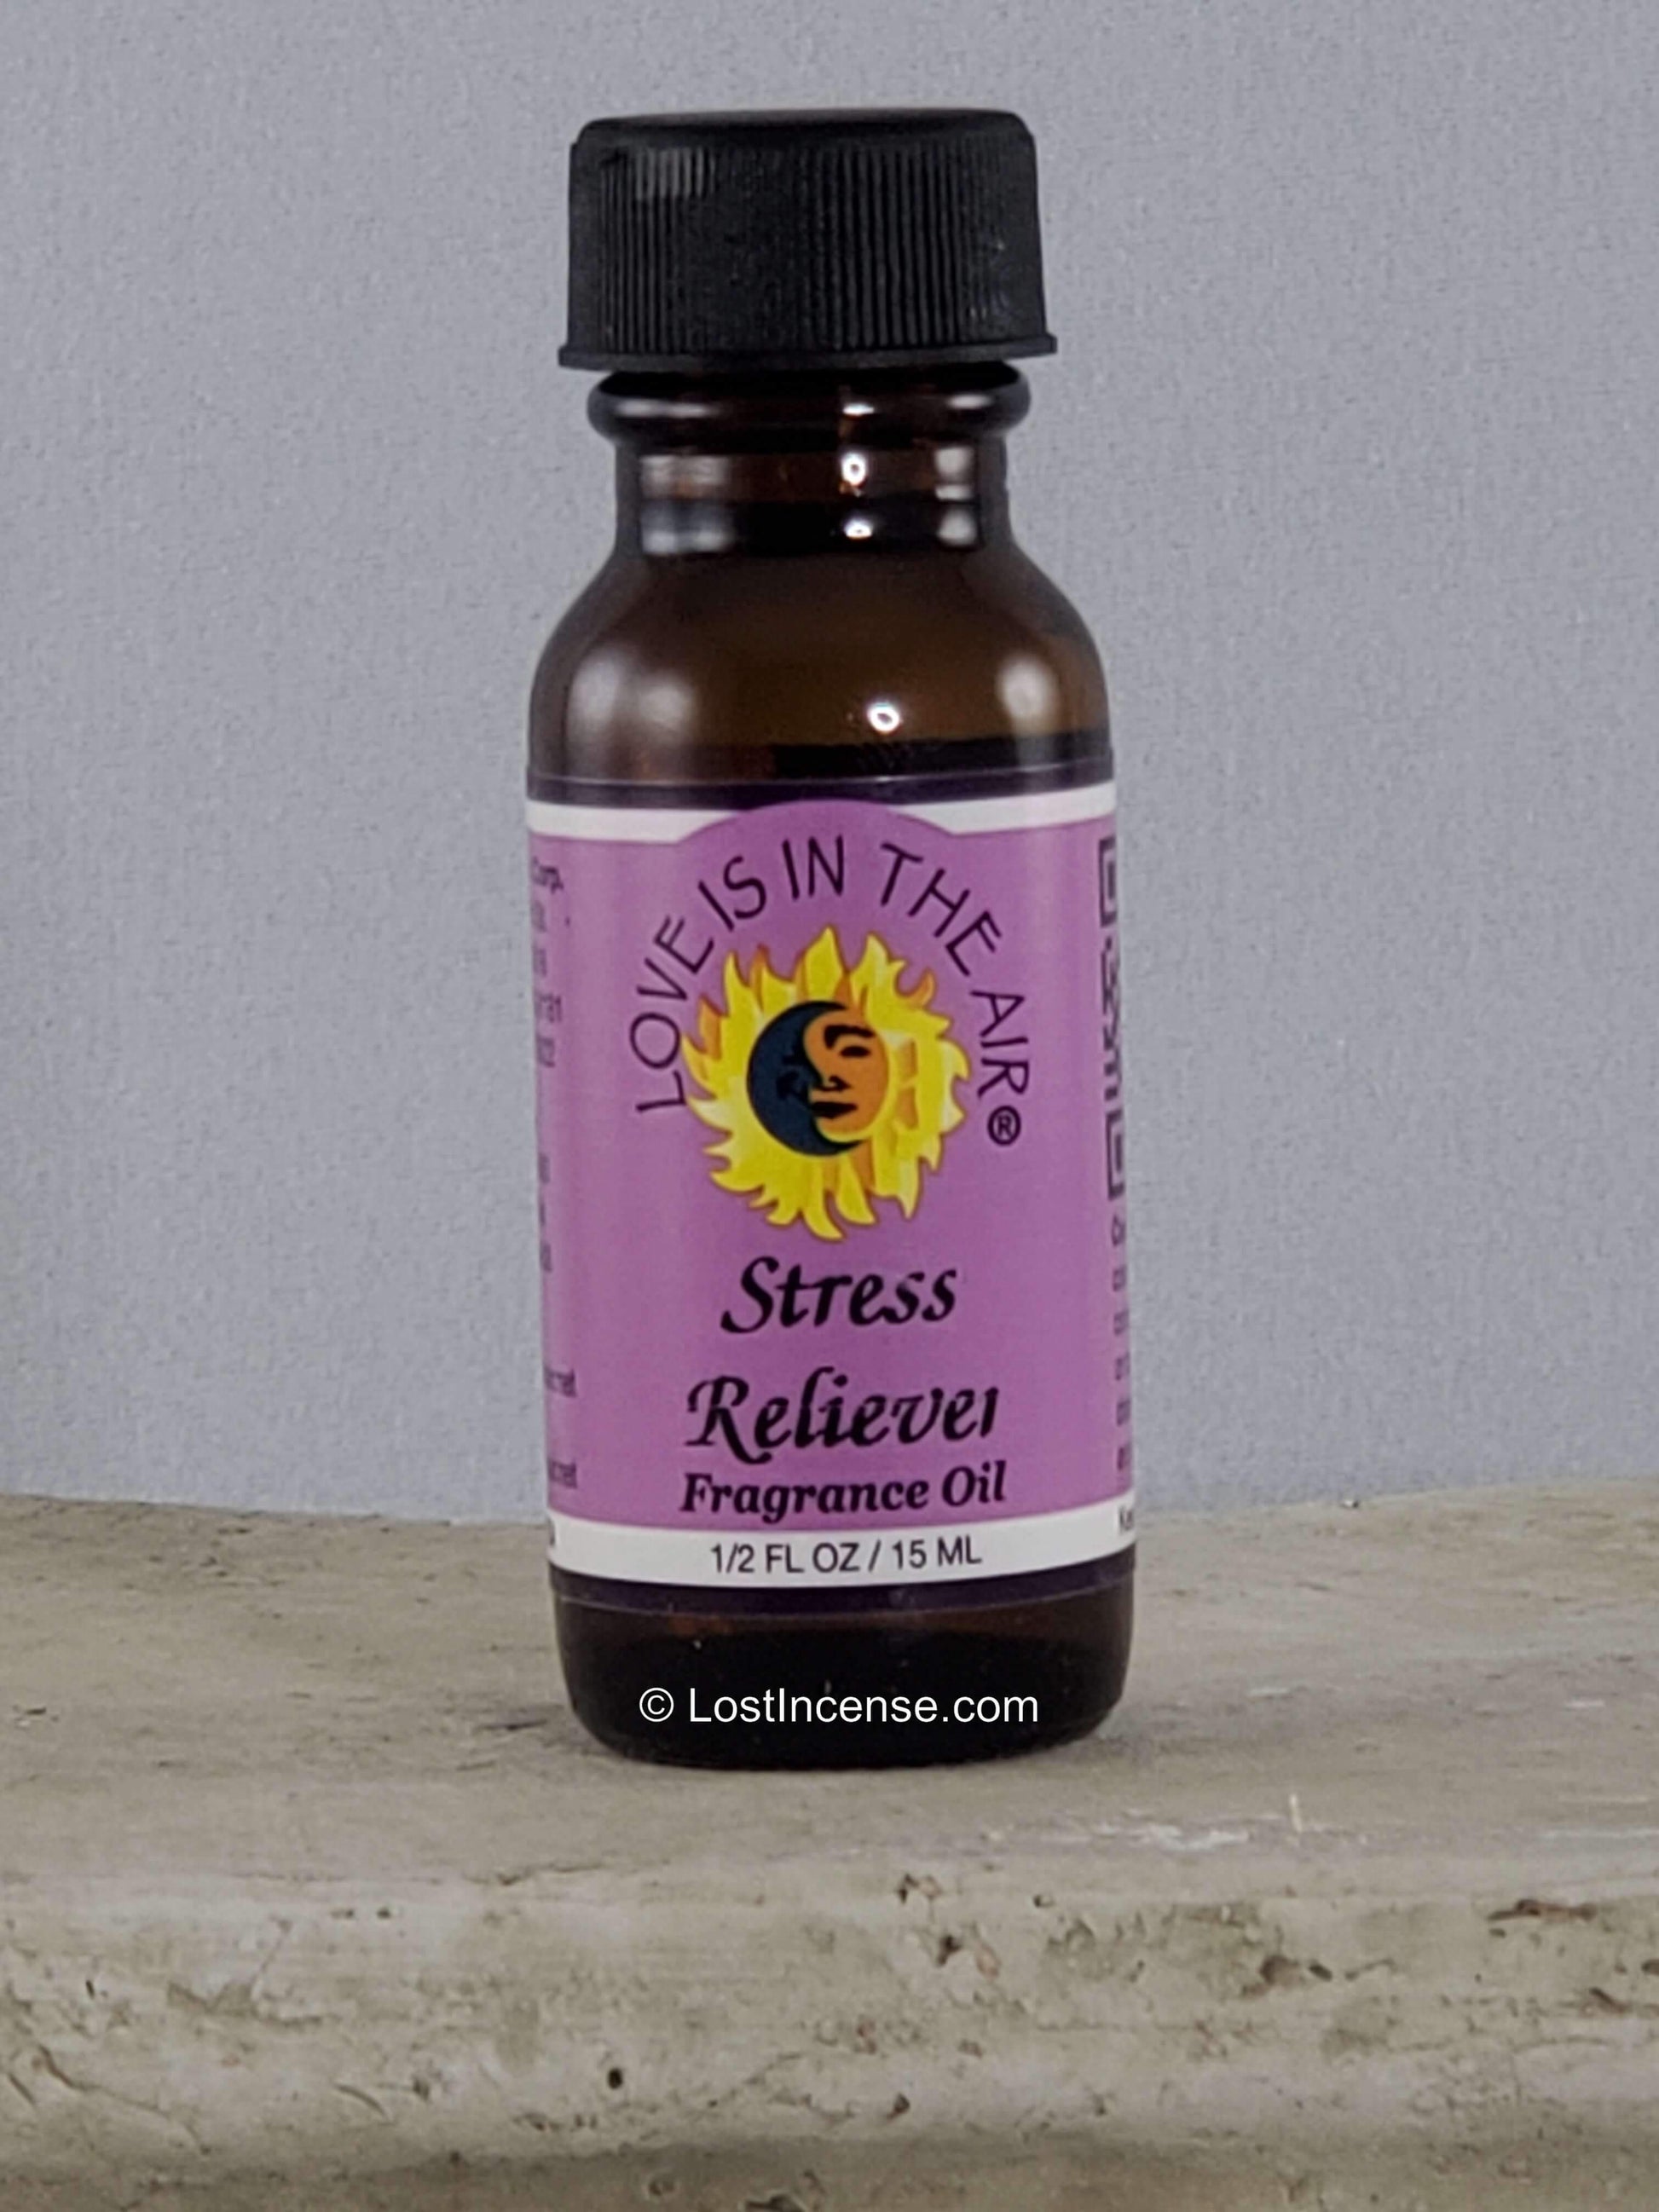 Stress Reliever Fragrance Oil LostIncense.com